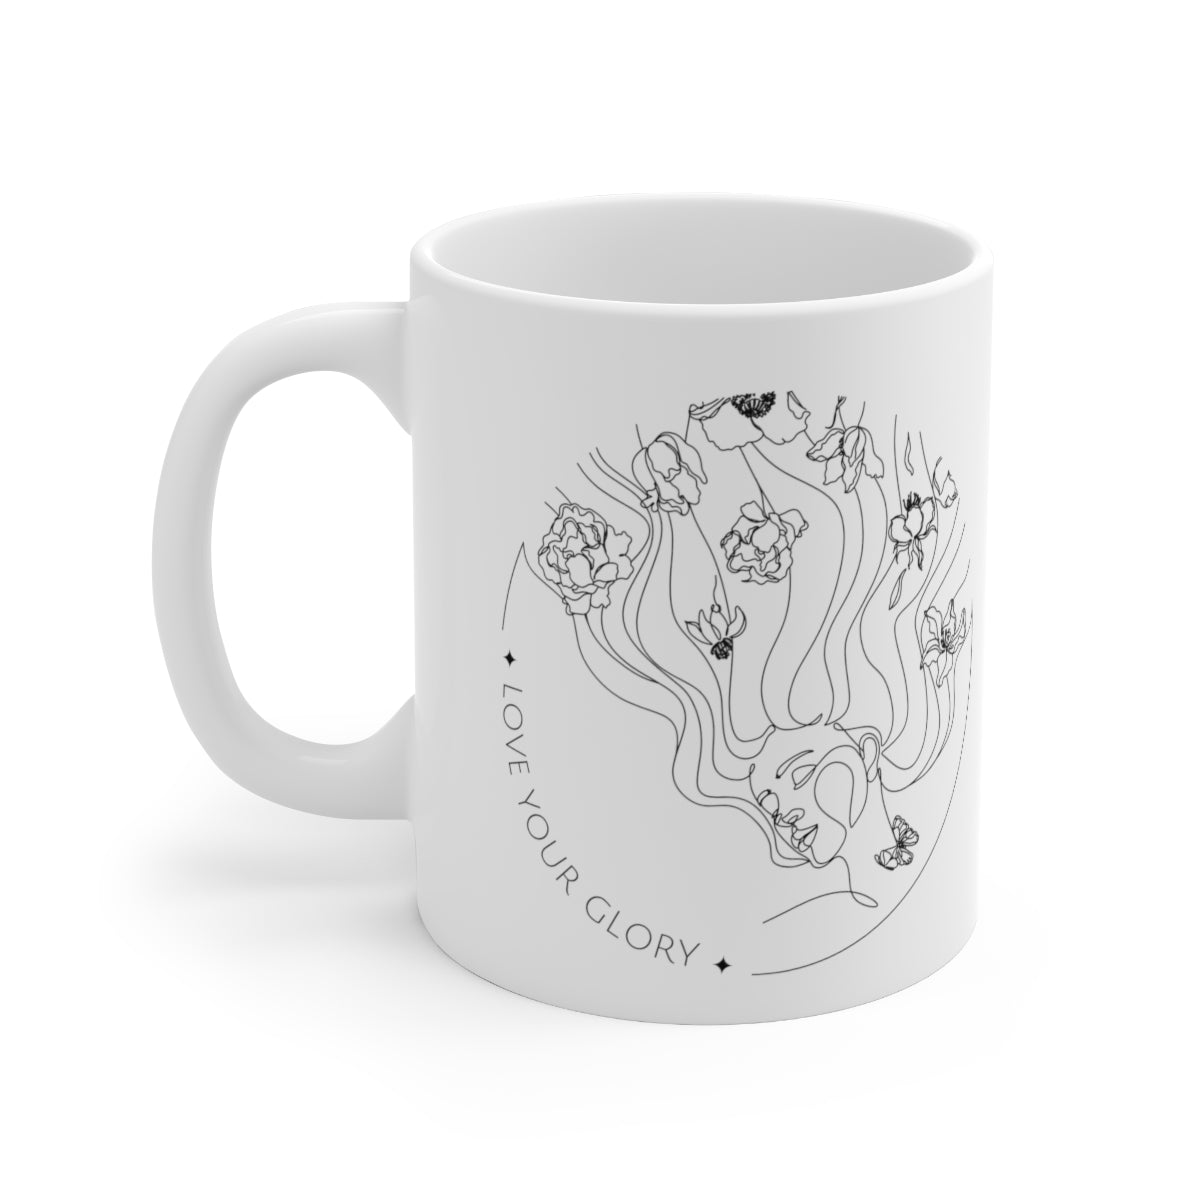 Love Your Glory Ceramic Mug 11oz